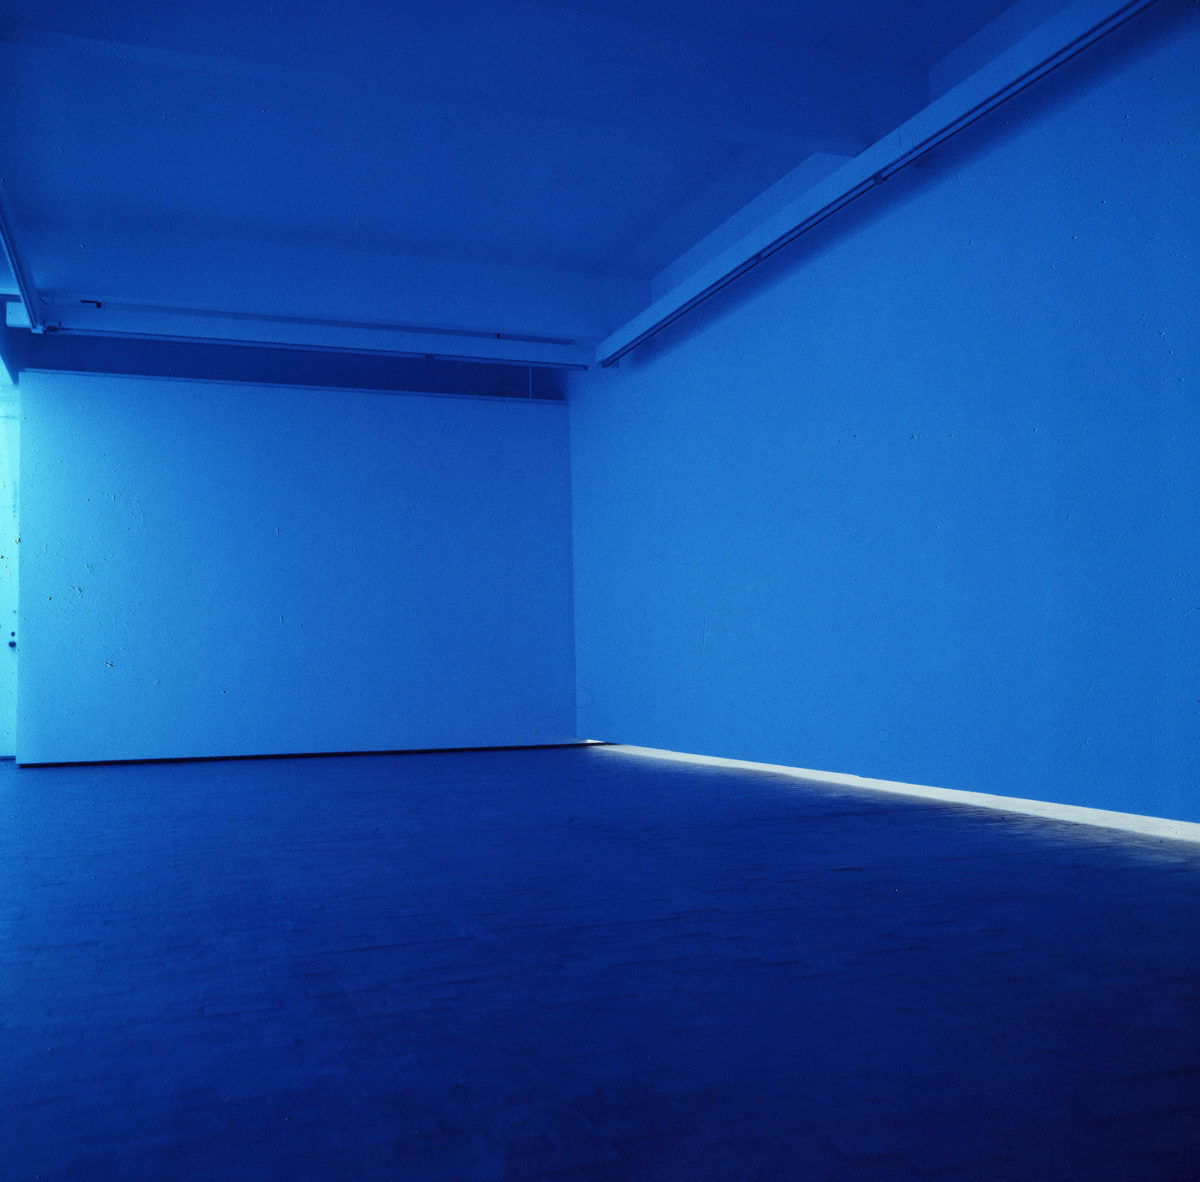 Bruce Nauman, Natural Light, Blue Light Room, 1971 (via Artists Rights Society and DACS) 